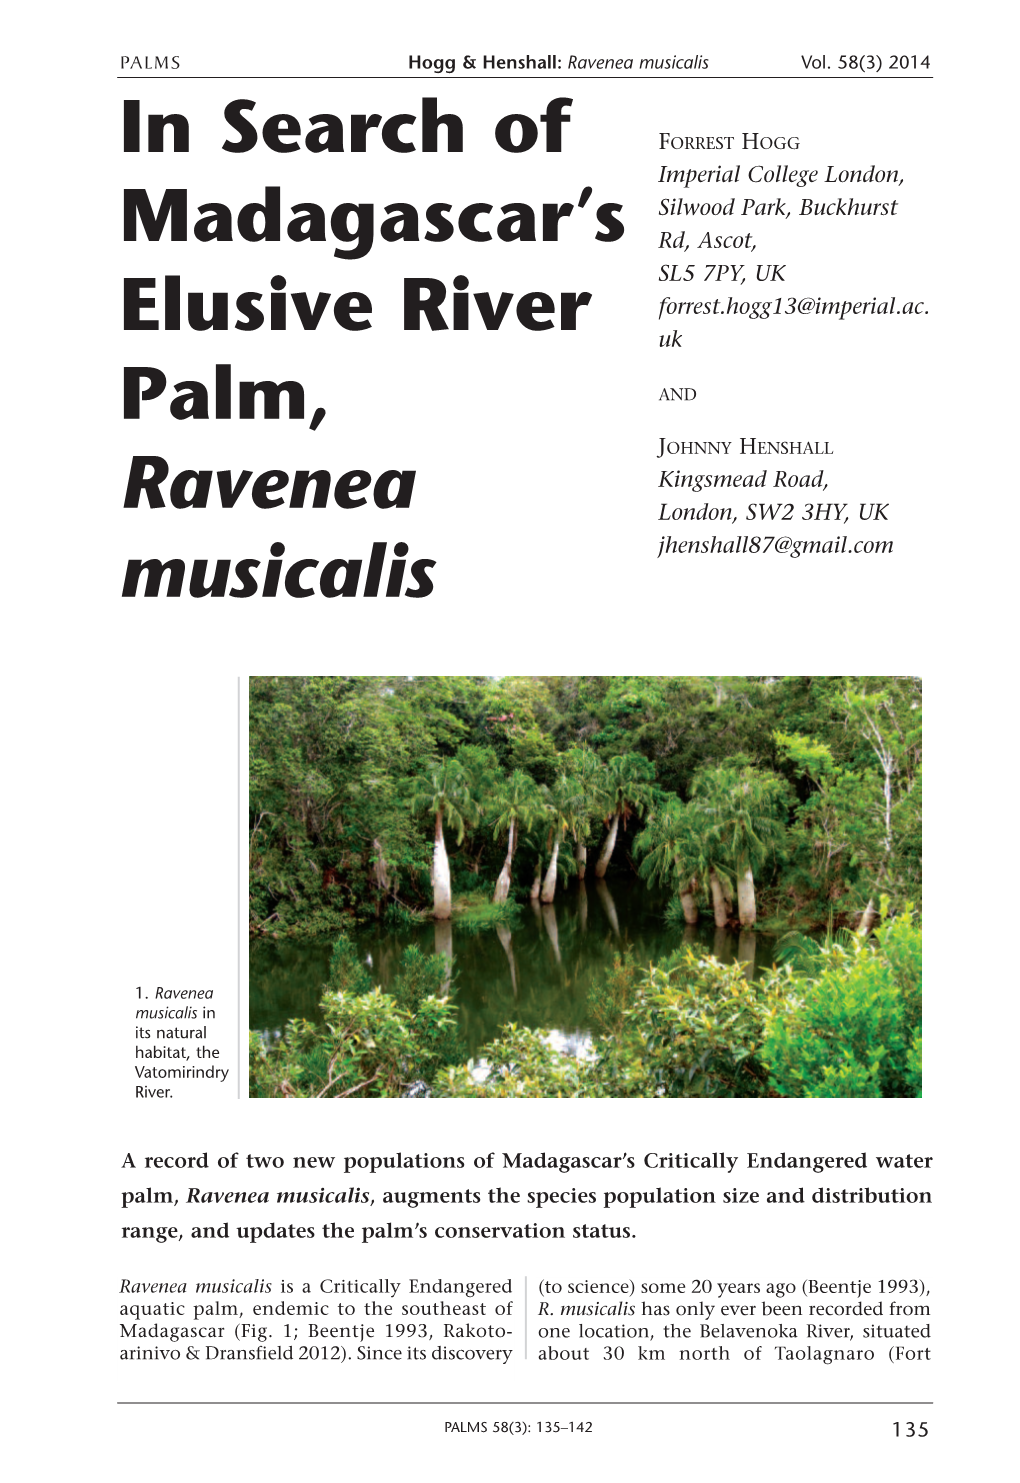 In Search of Madagascar's Elusive River Palm, Ravenea Musicalis